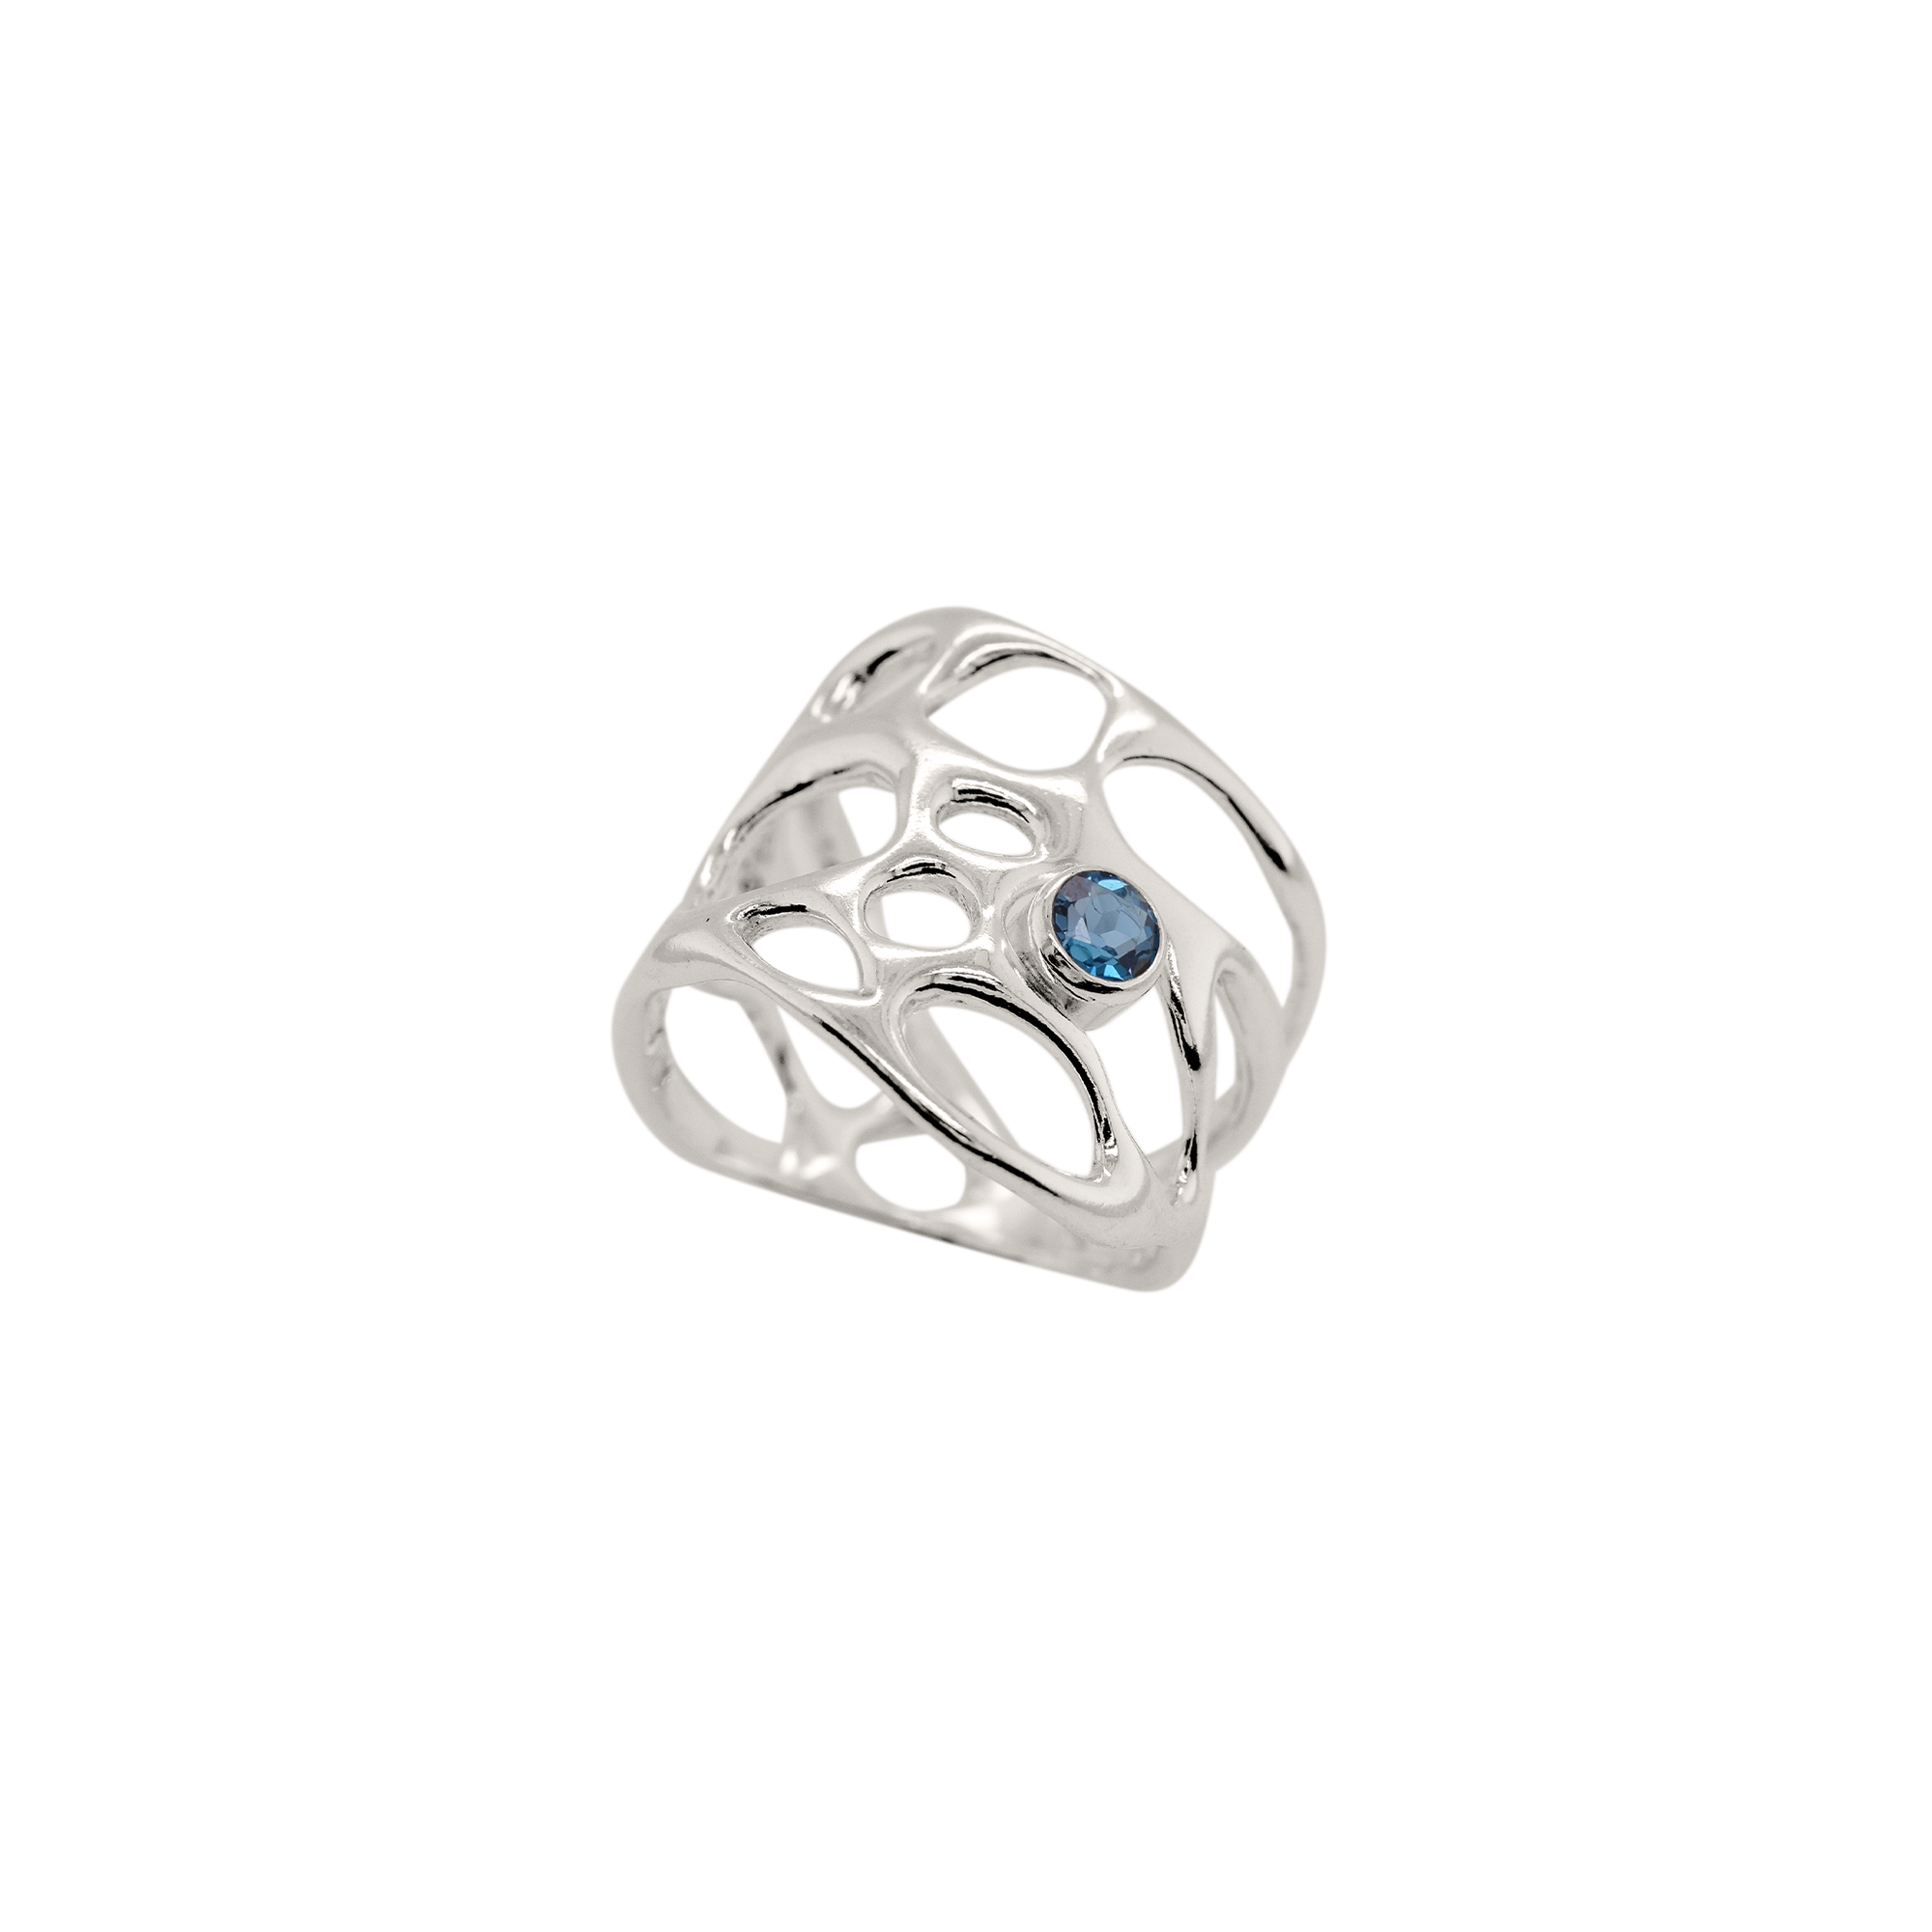 handmade silver botanical ring with gemstone on white background